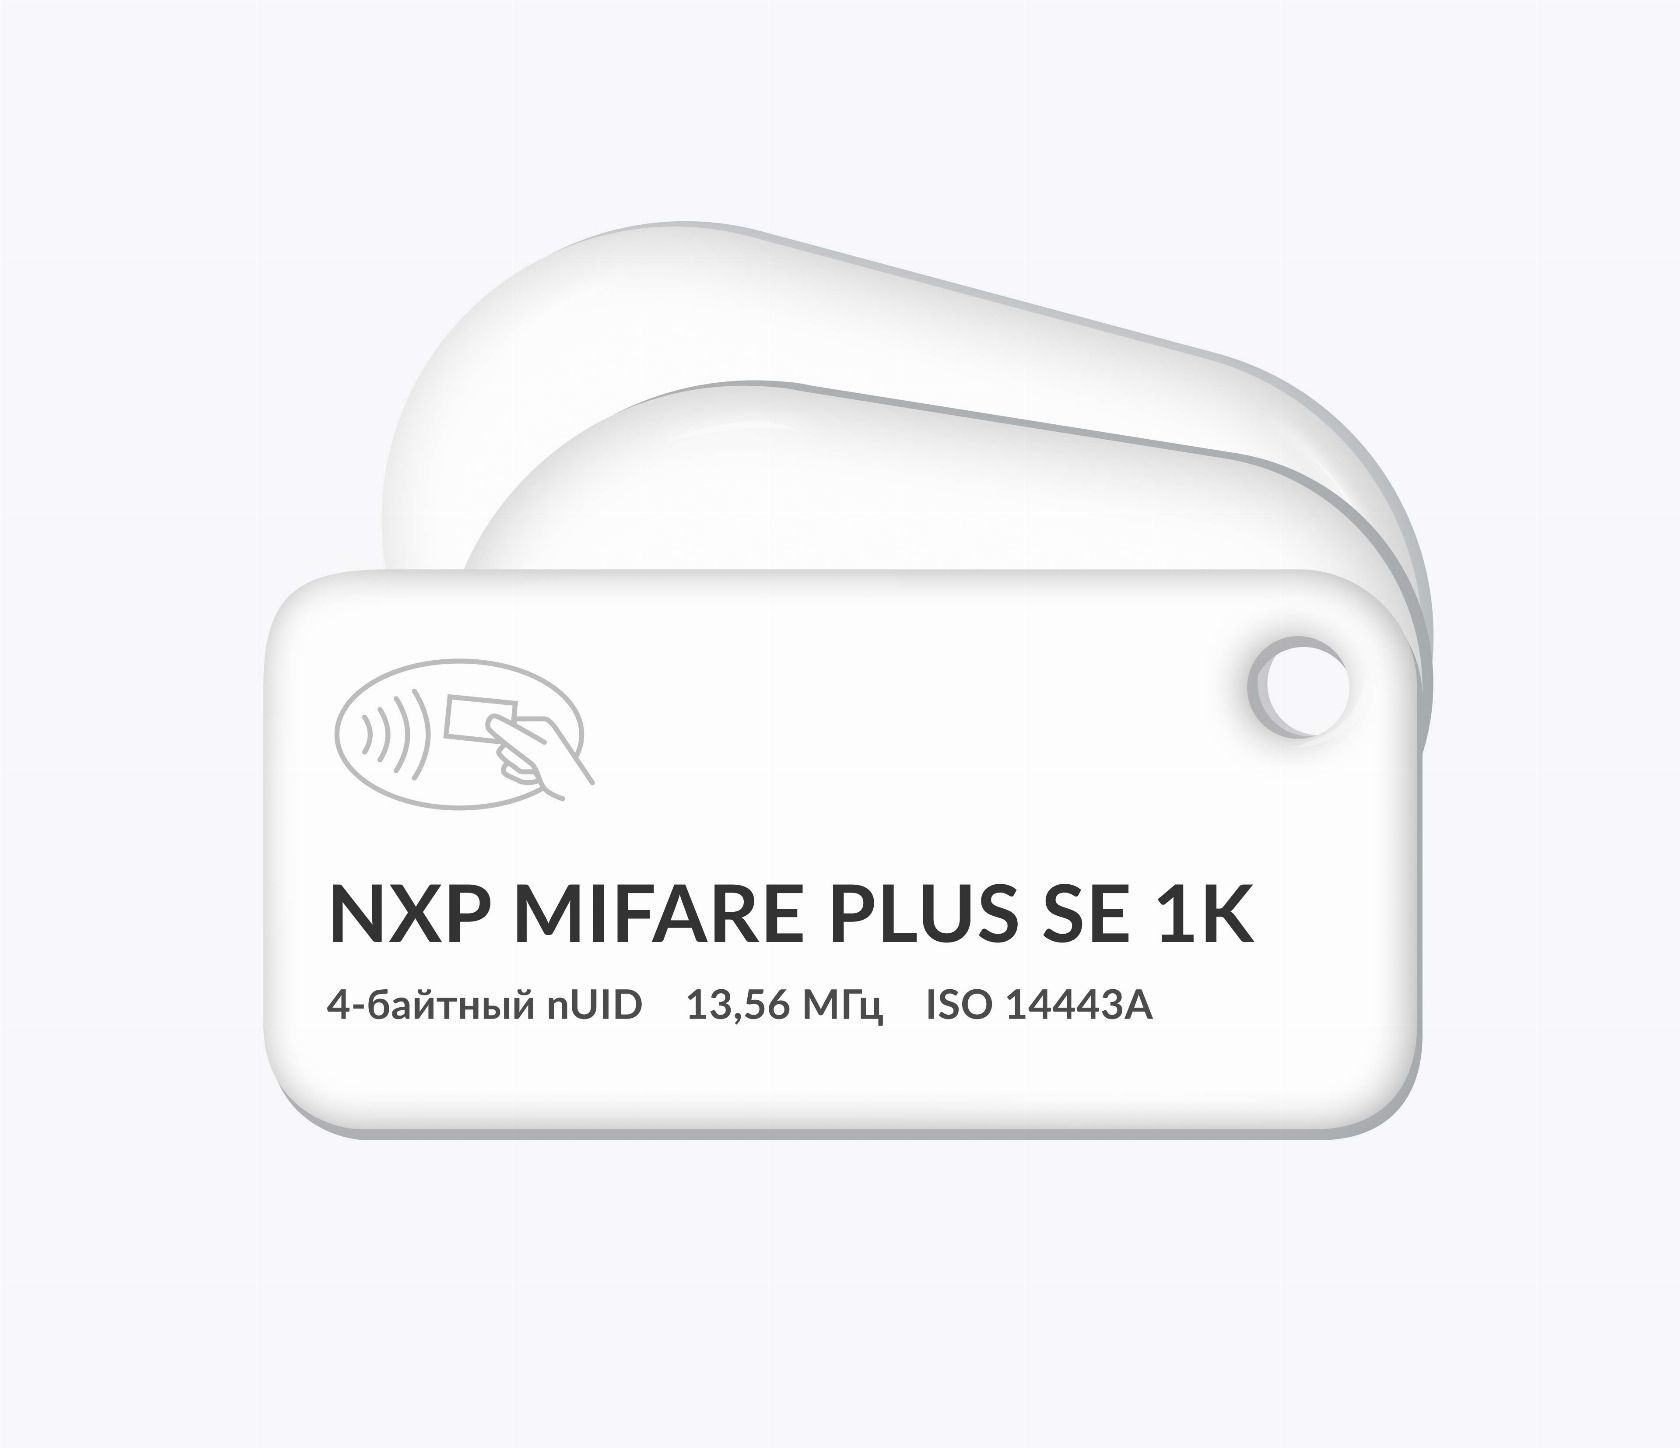 RFID-брелоки NEOKEY® с чипом NXP MIFARE Plus SE 1k 4 byte nUID и вашим логотипом RFID-брелоки NEOKEY® с чипом NXP MIFARE Plus SE 1k 4 byte nUID и вашим логотипом